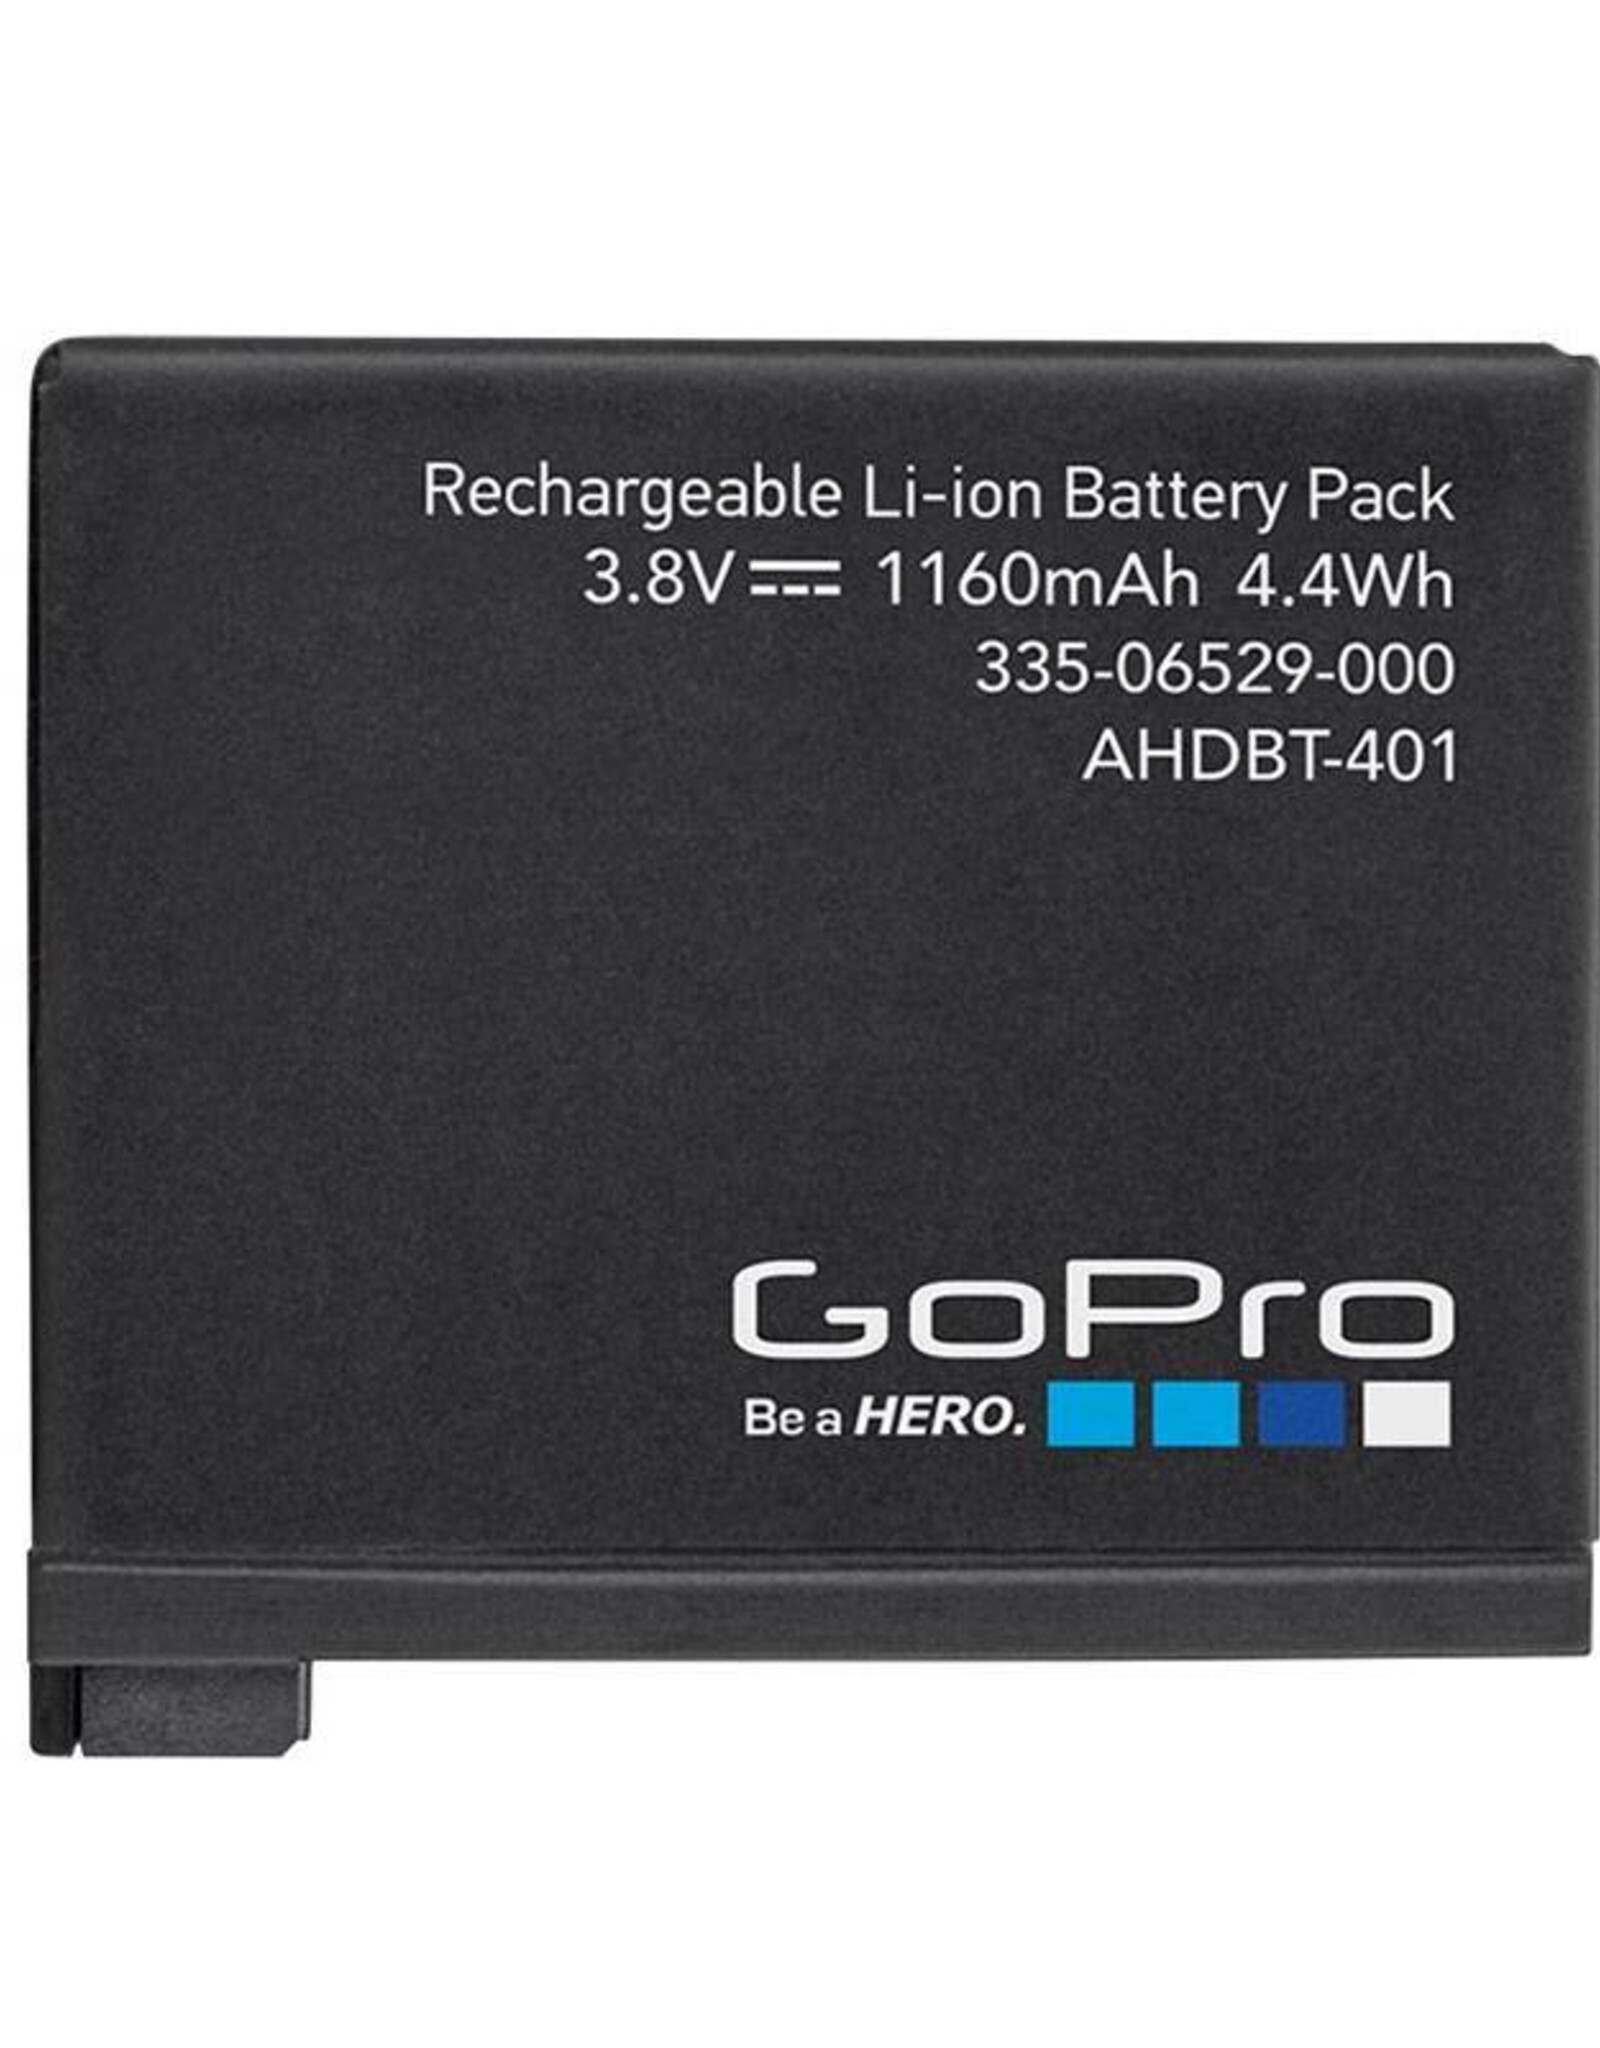 Gopro Gopro Rechargeble Battery Gopro 4